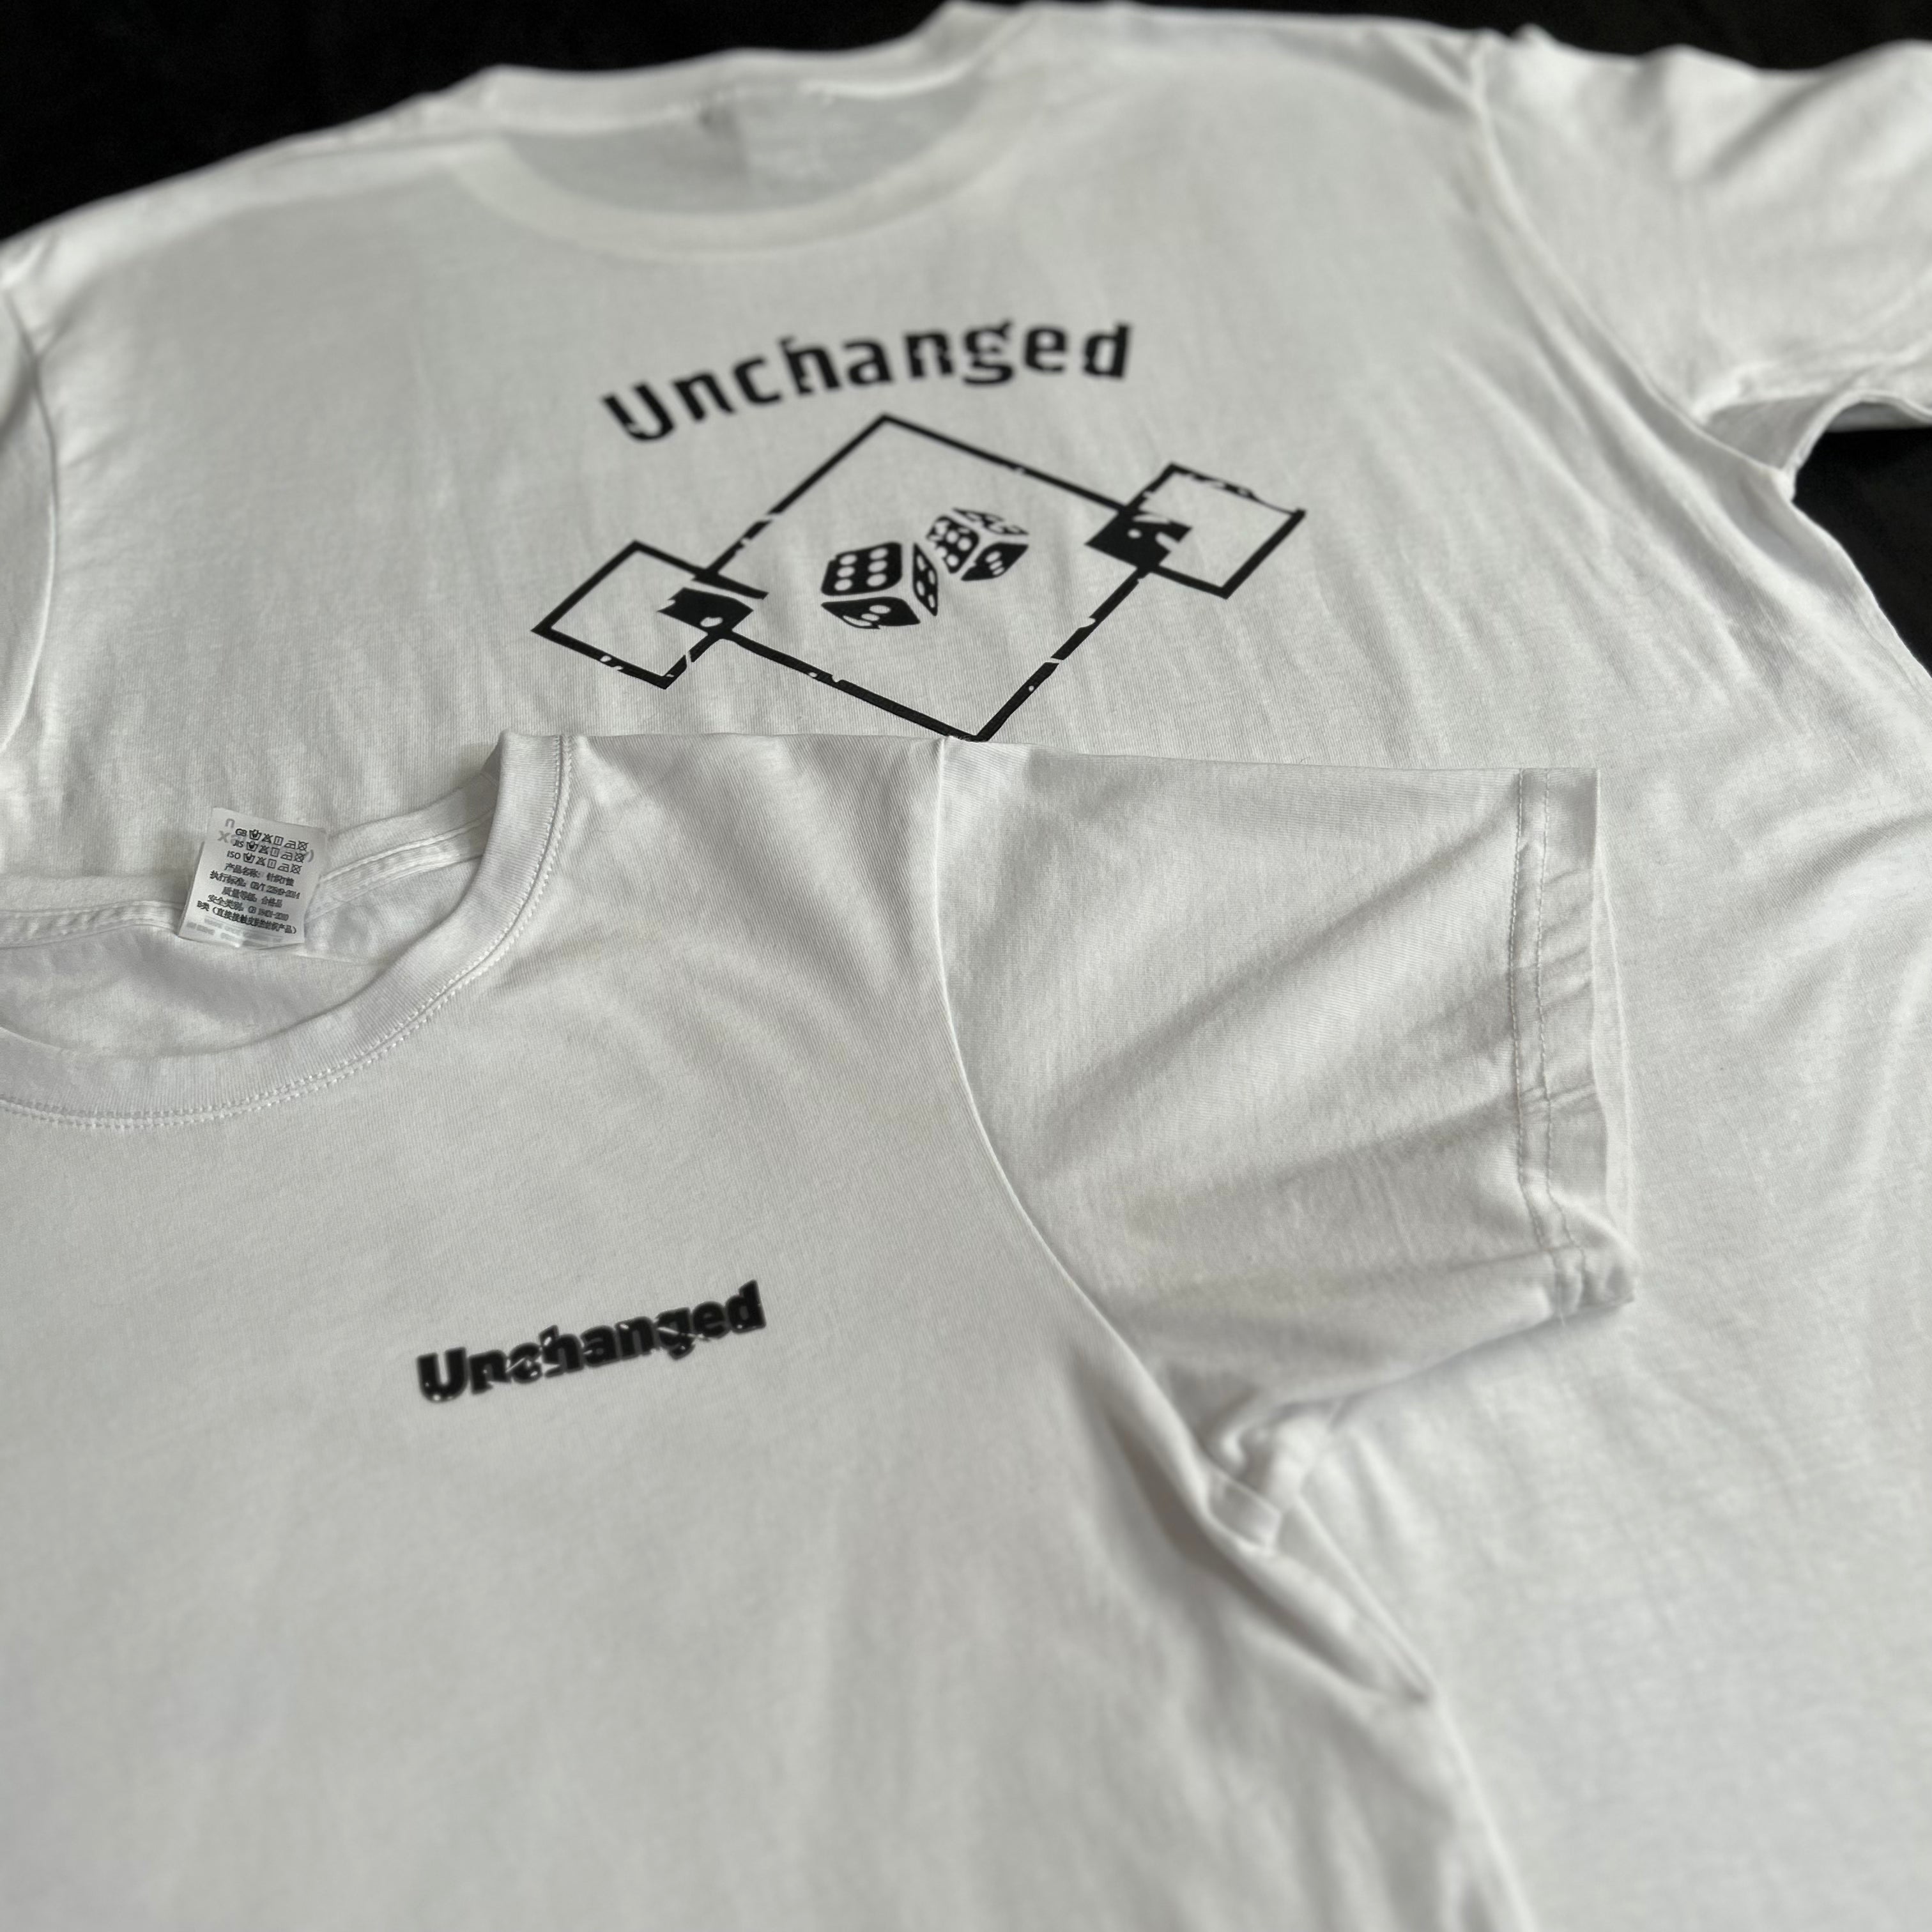 unchanged-short-sleeve-t-shirt